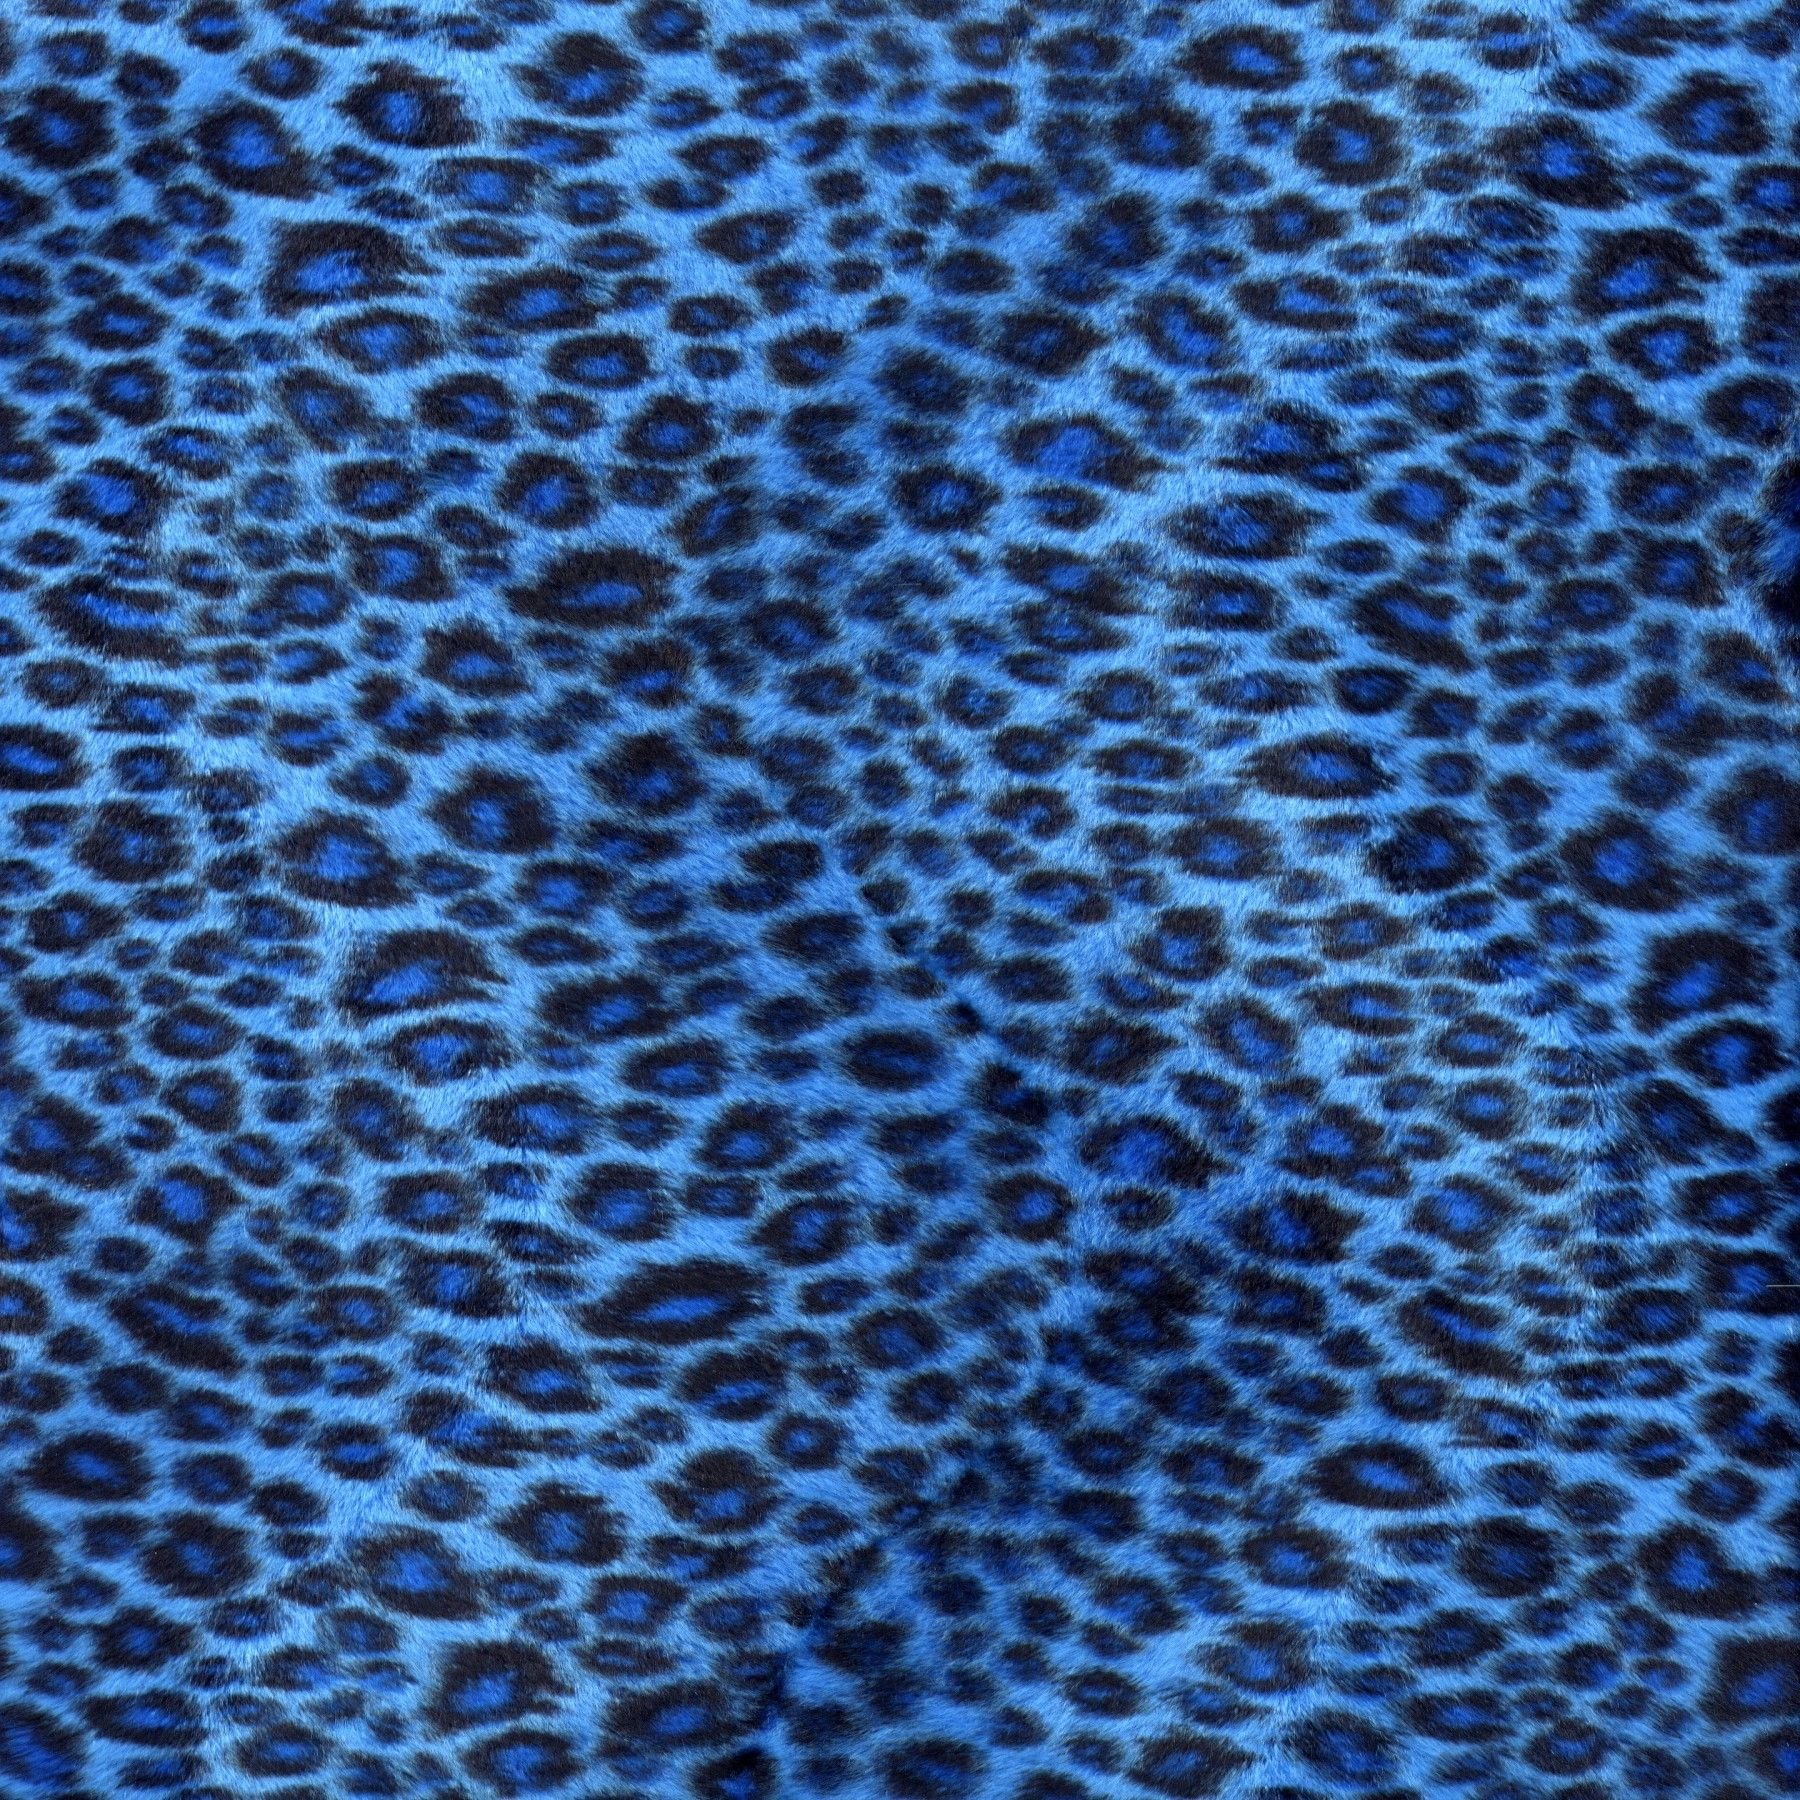 Download Wallpaper, Download leopard print 1800x1800 wallpaper Animals HD Wallpaper, Hi Res Animals Wallpaper, High Definition Wallpaper